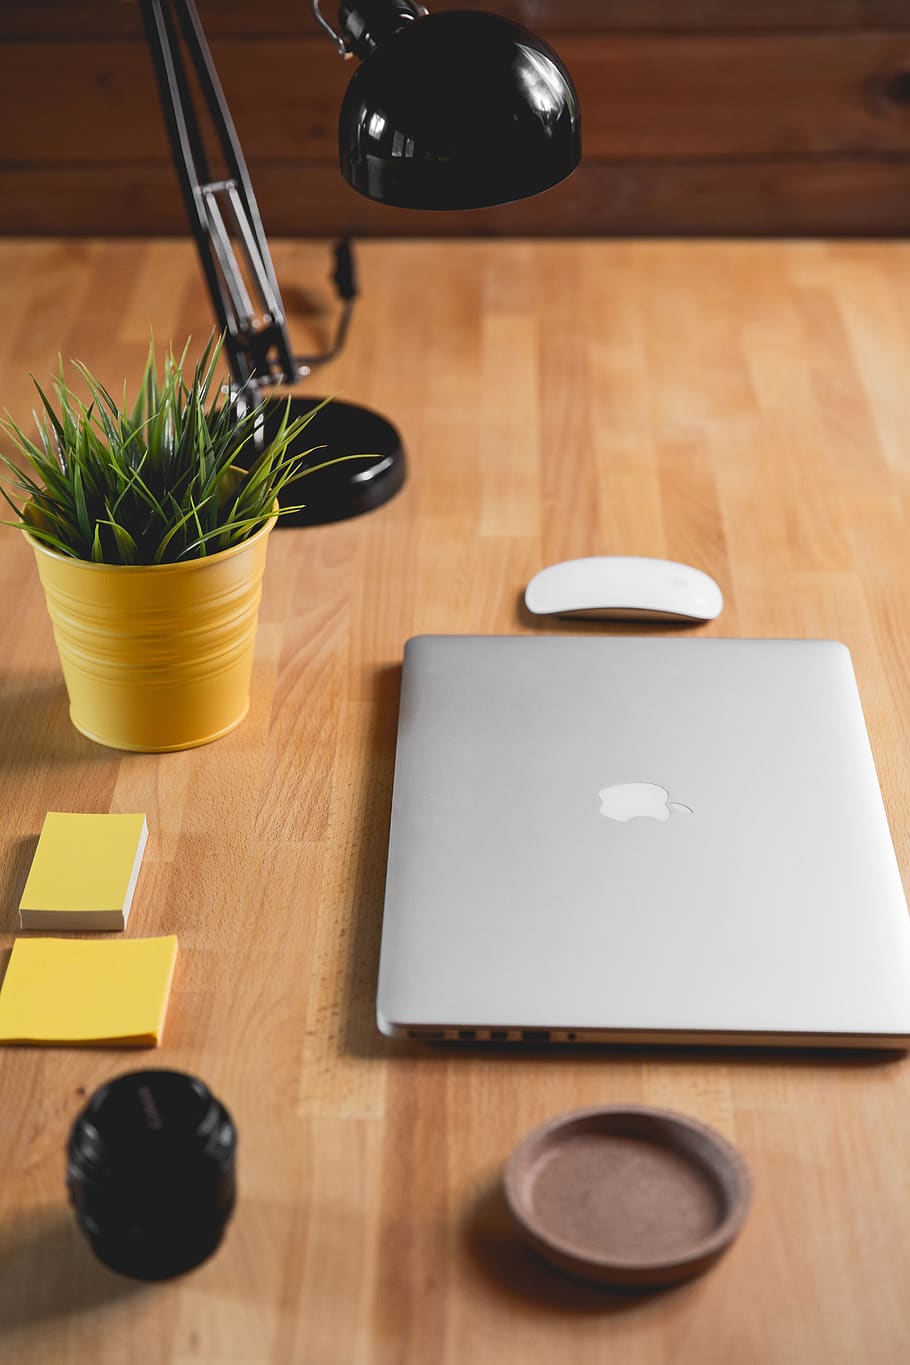 macbook, mouse, lamp, black, post it, yellow, desk, office, business, plant